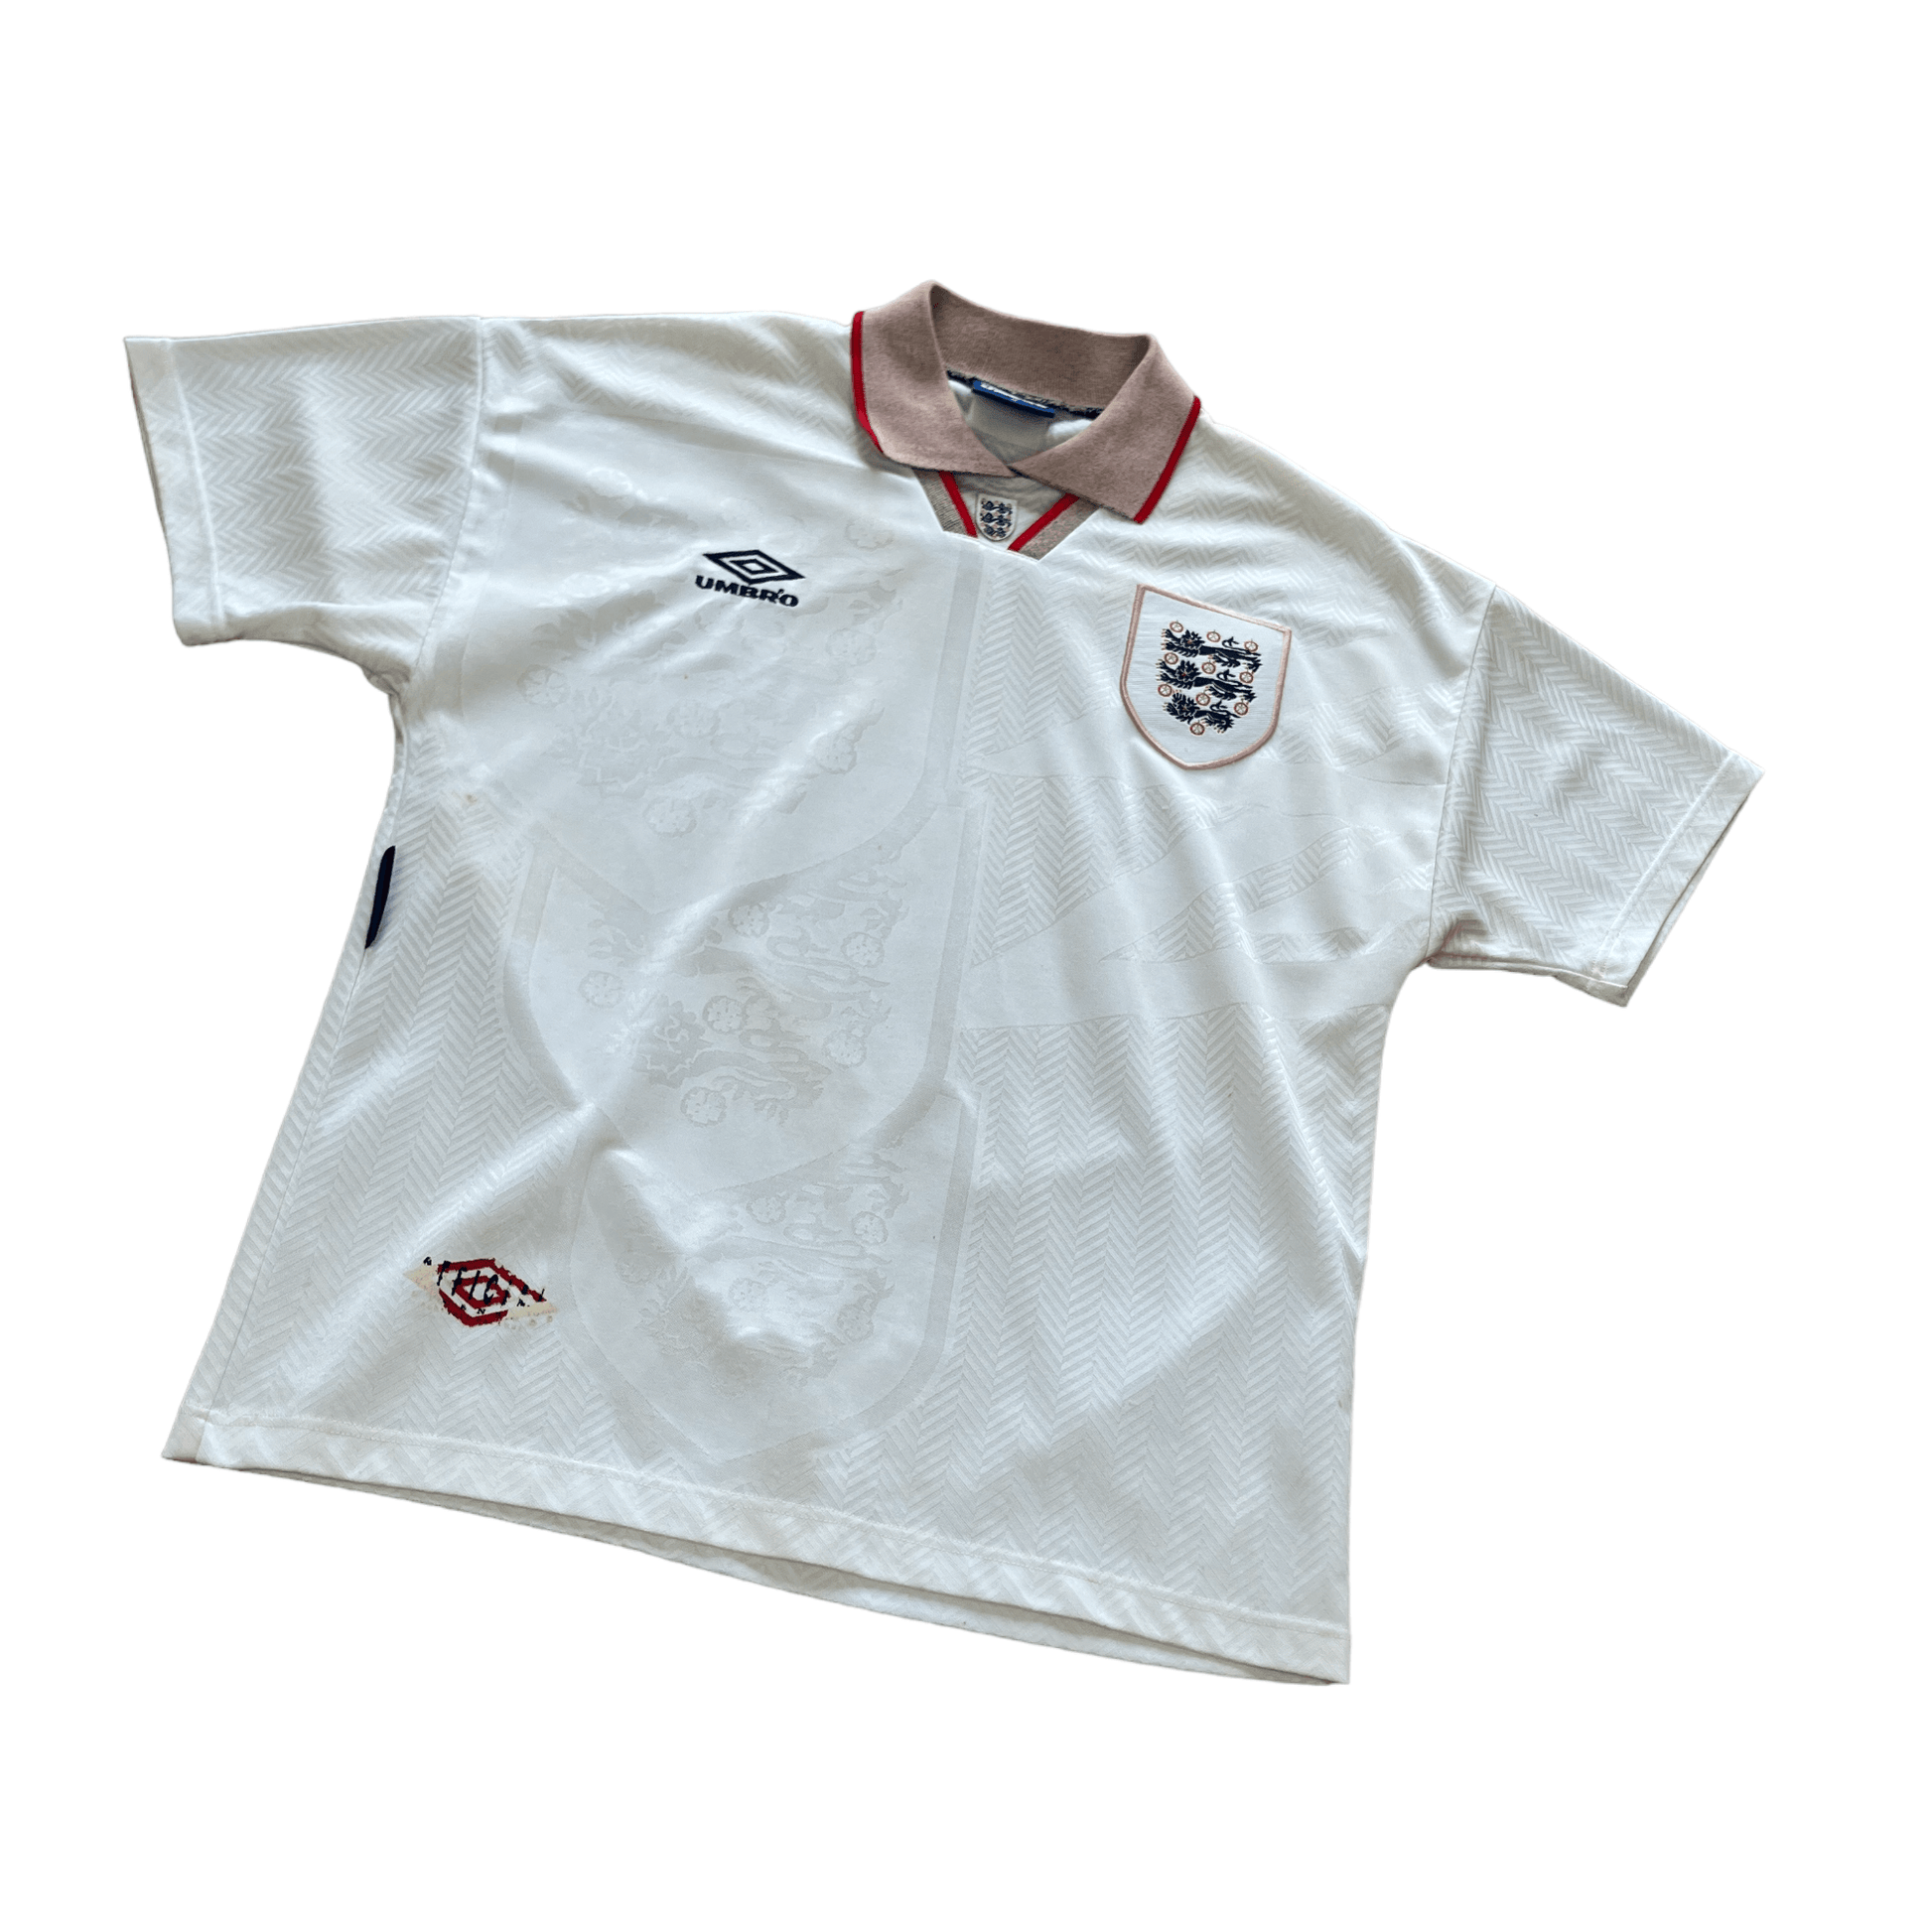 1993-95 Umbro England Home Shirt - Medium - The Streetwear Studio